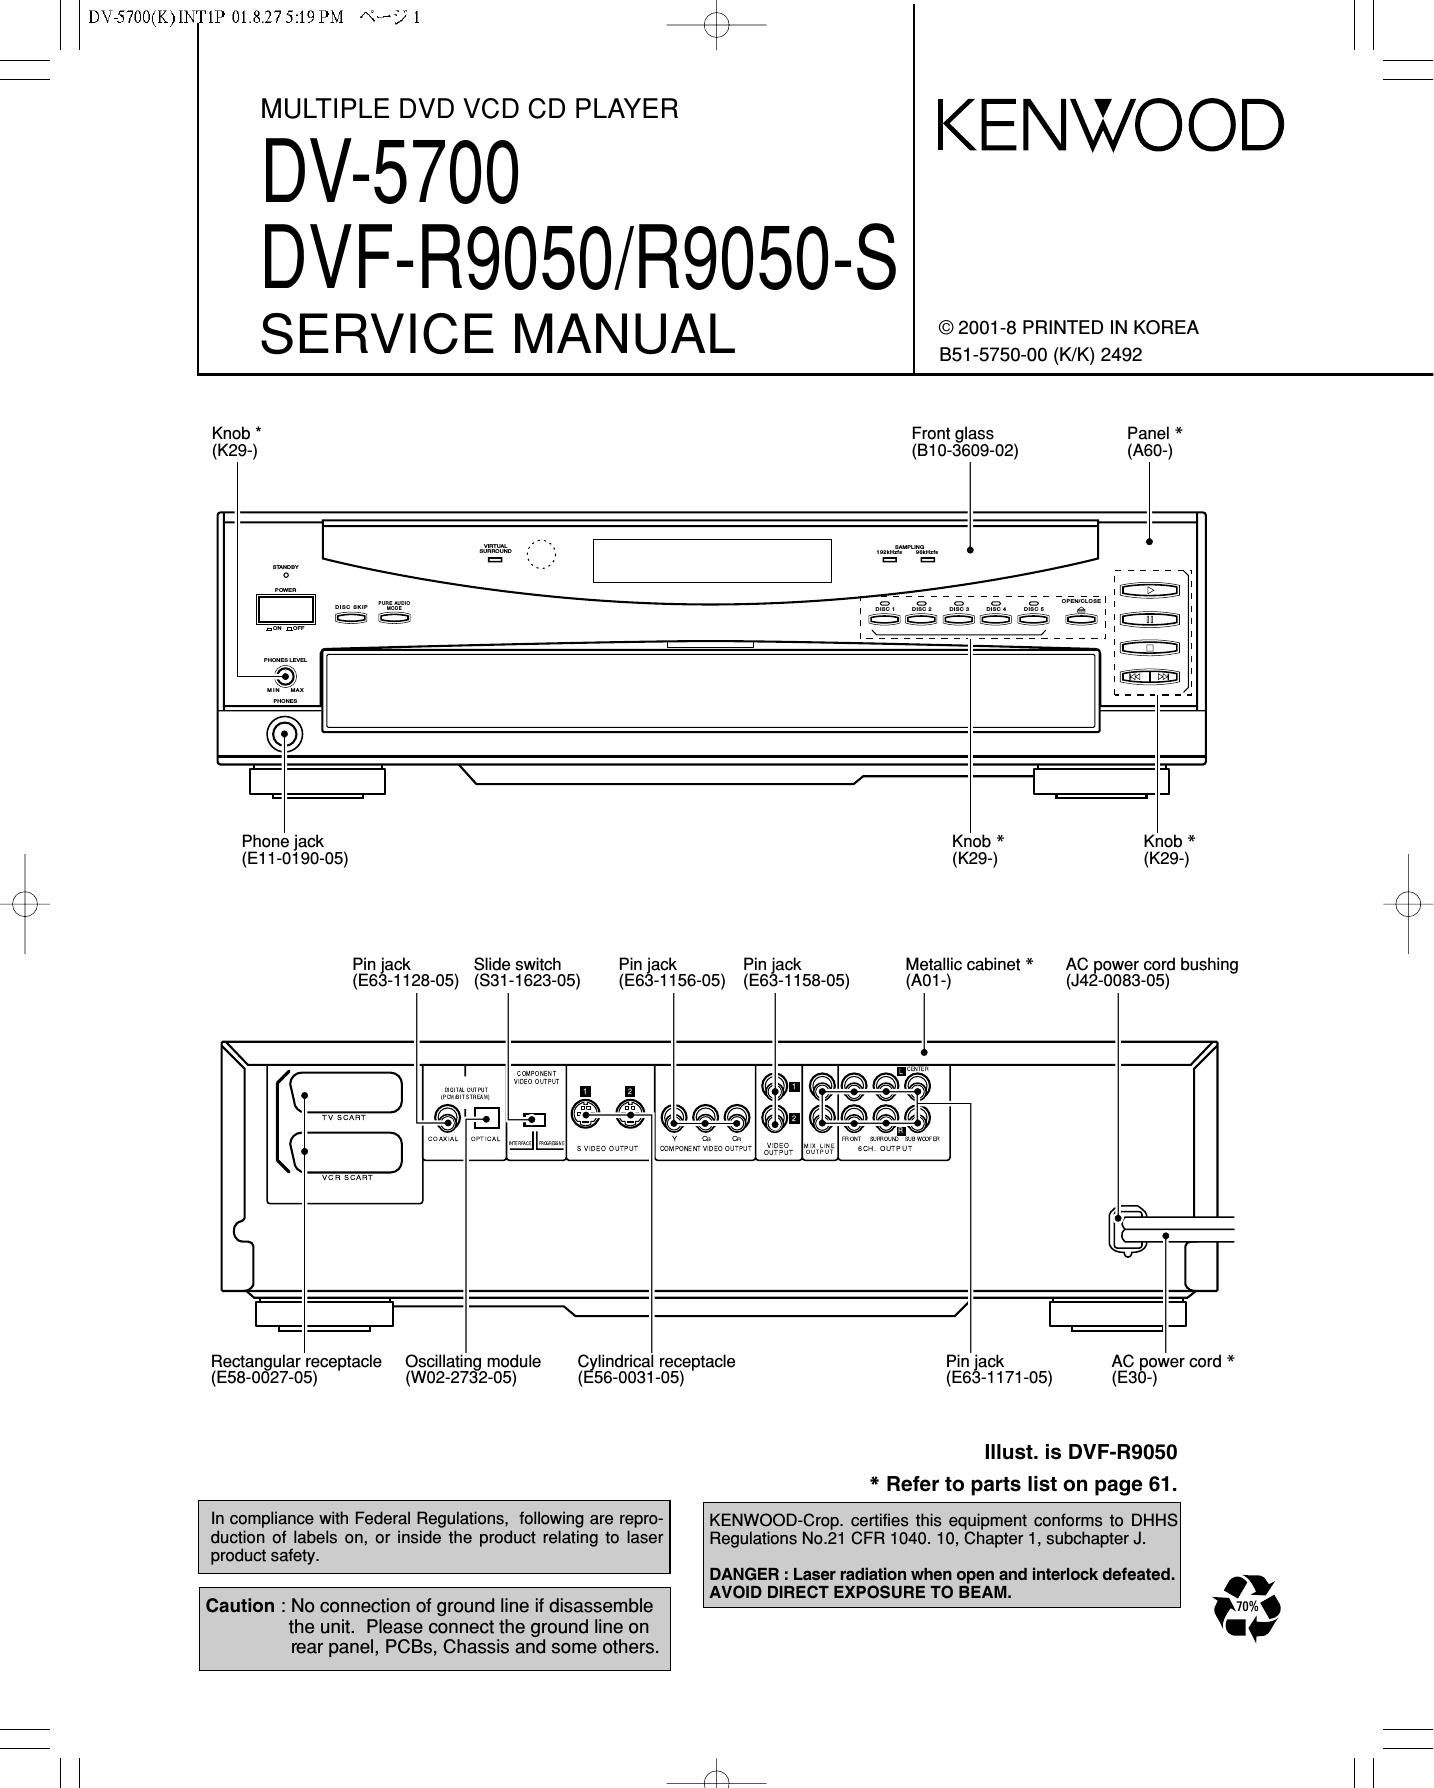 Kenwood DVFR 9050 S Service Manual